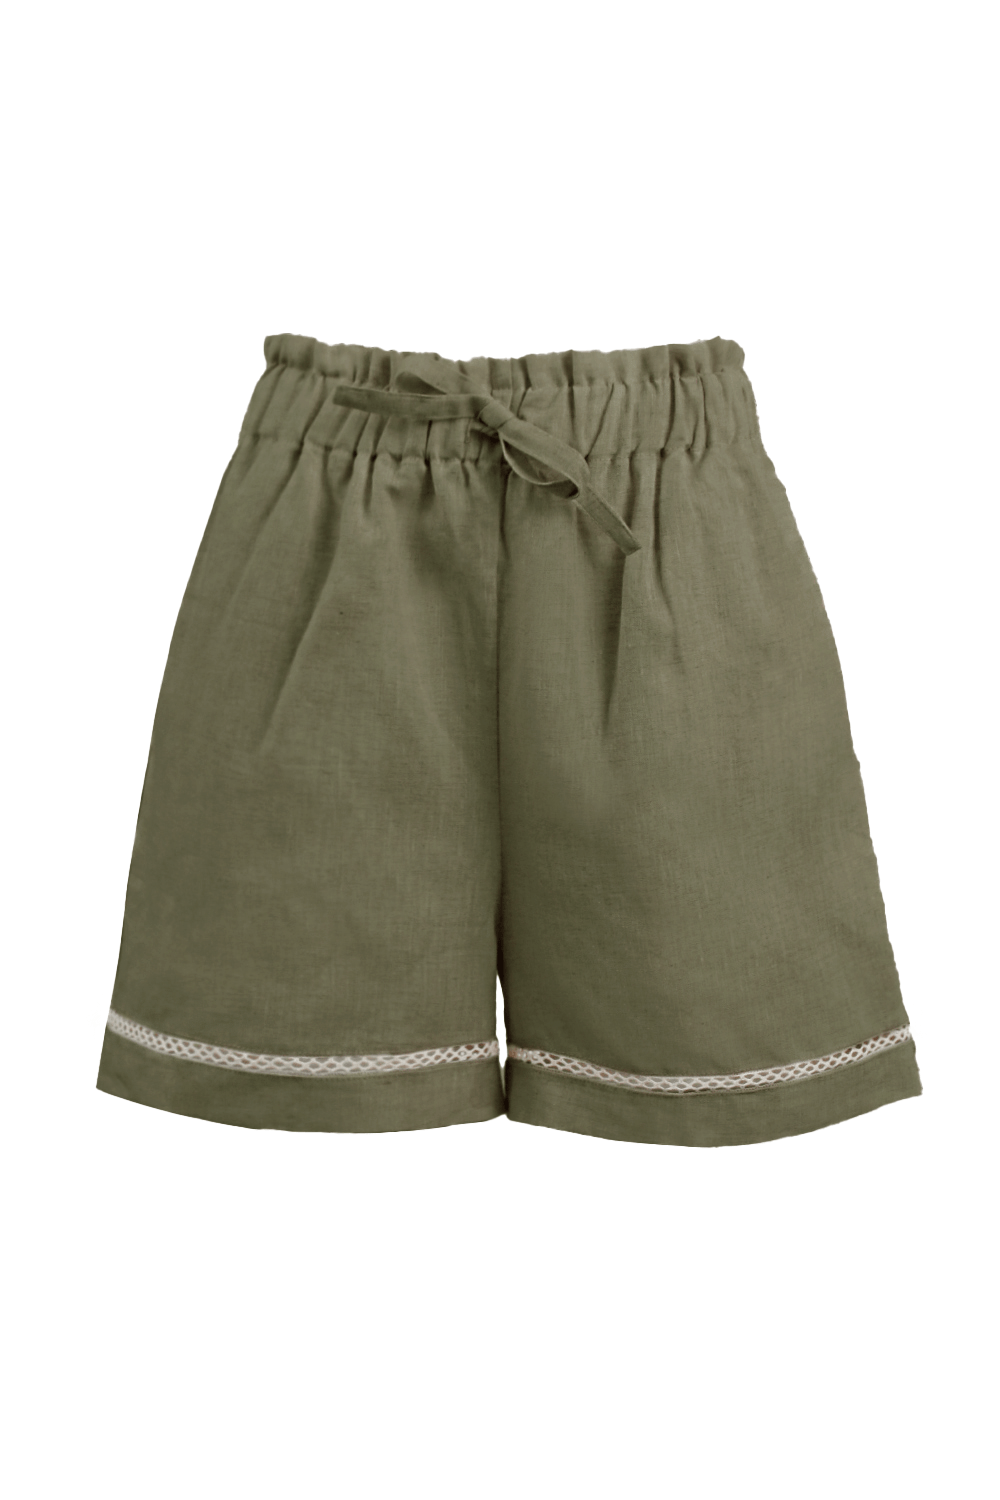 La Palma Pure Linen Shorts Olive Pants